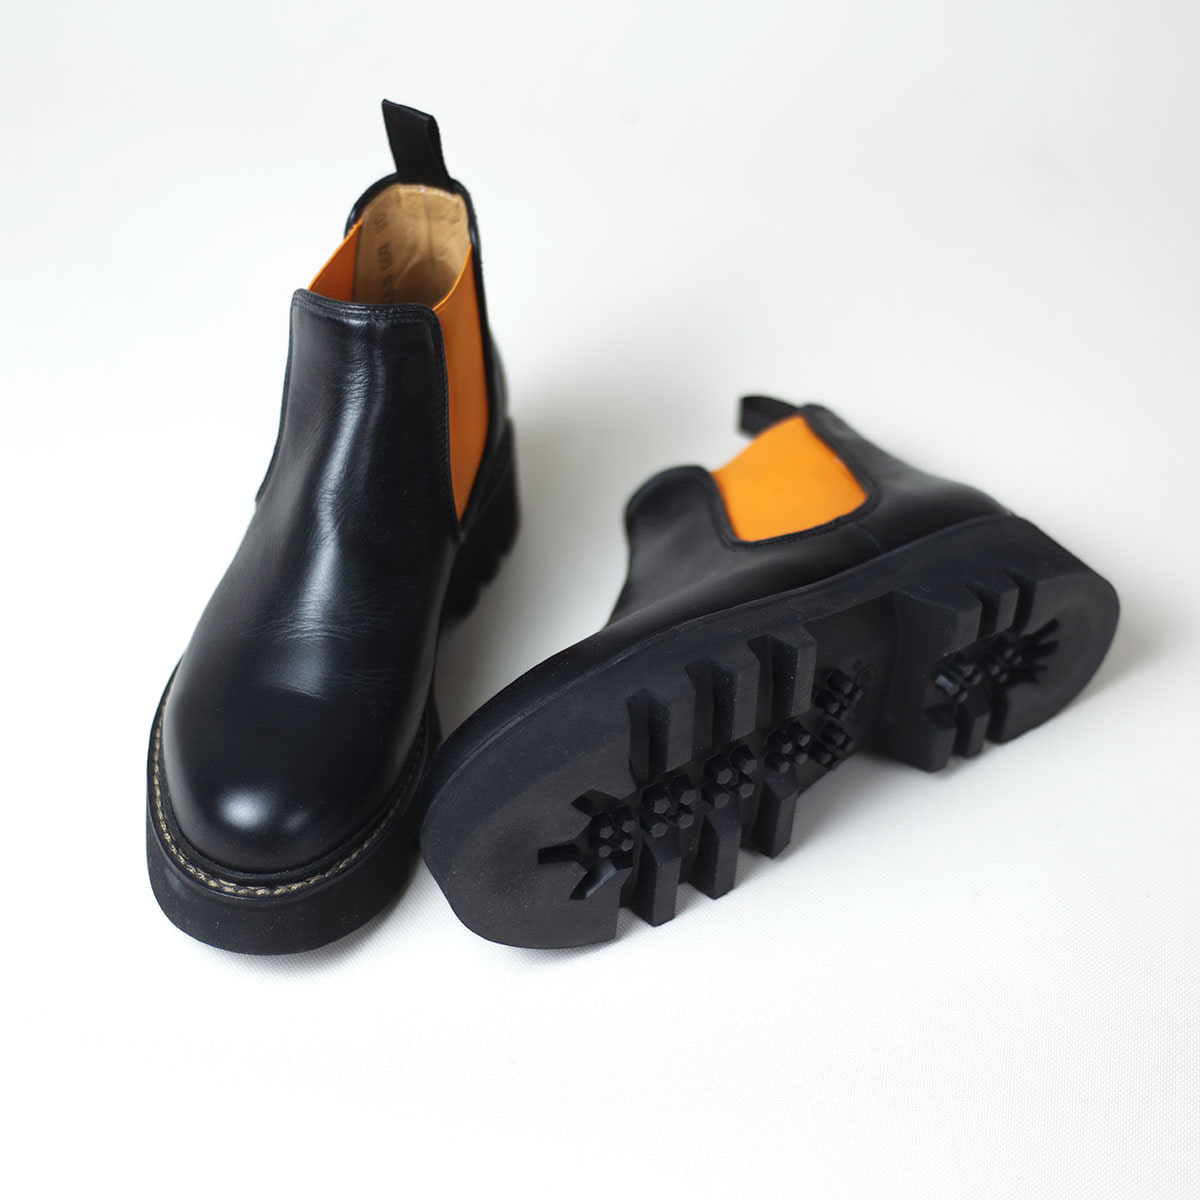 Rosamosa  Welted Chelsea Boot (cammello. white, black)